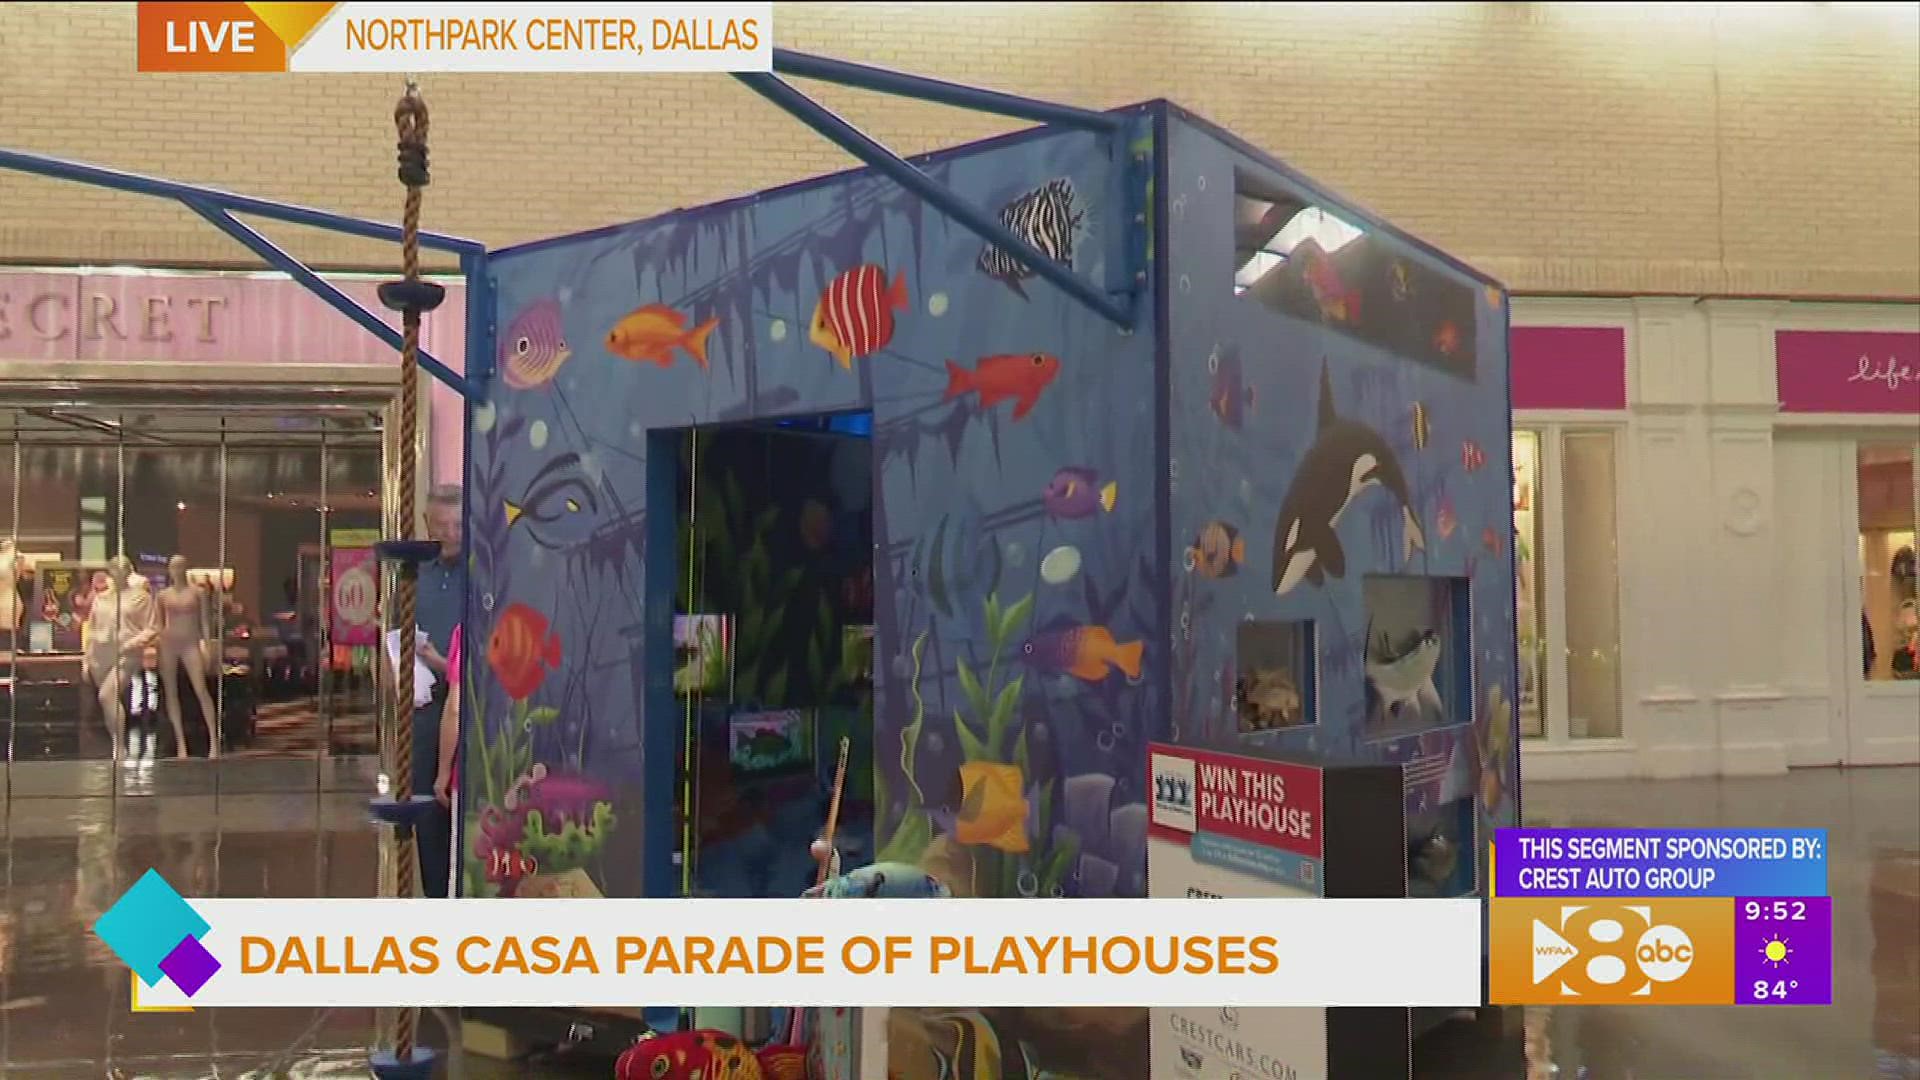 Dallas CASA Parade of Playhouses now at NorthPark Center